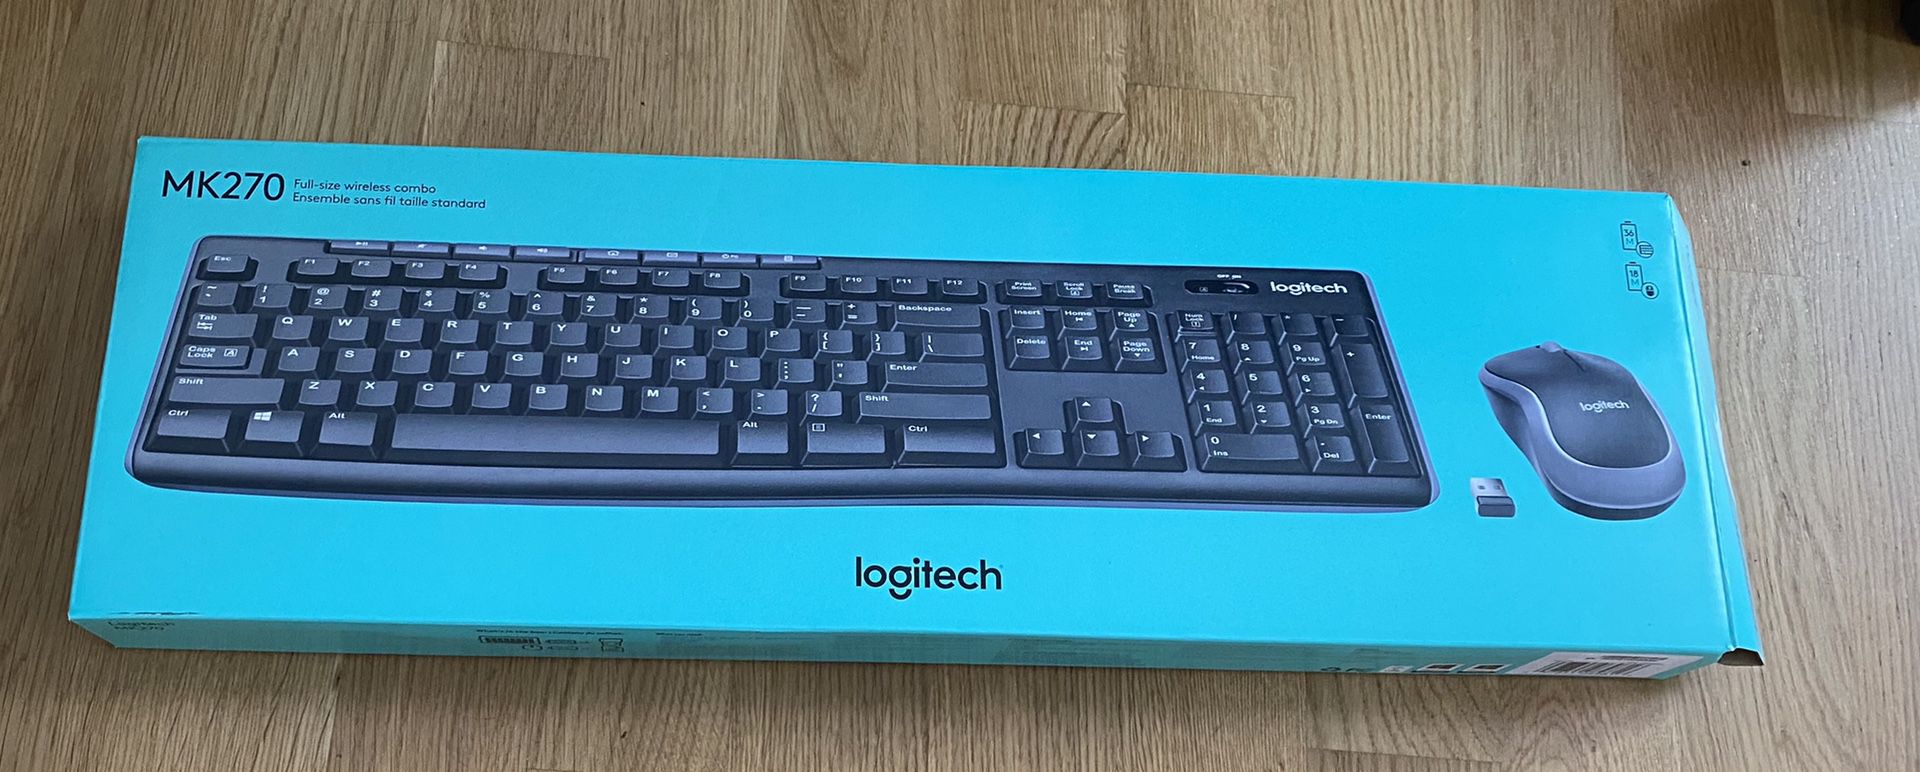 brand new in box Logitech MK270 Wireless Mouse/Keyboard combo